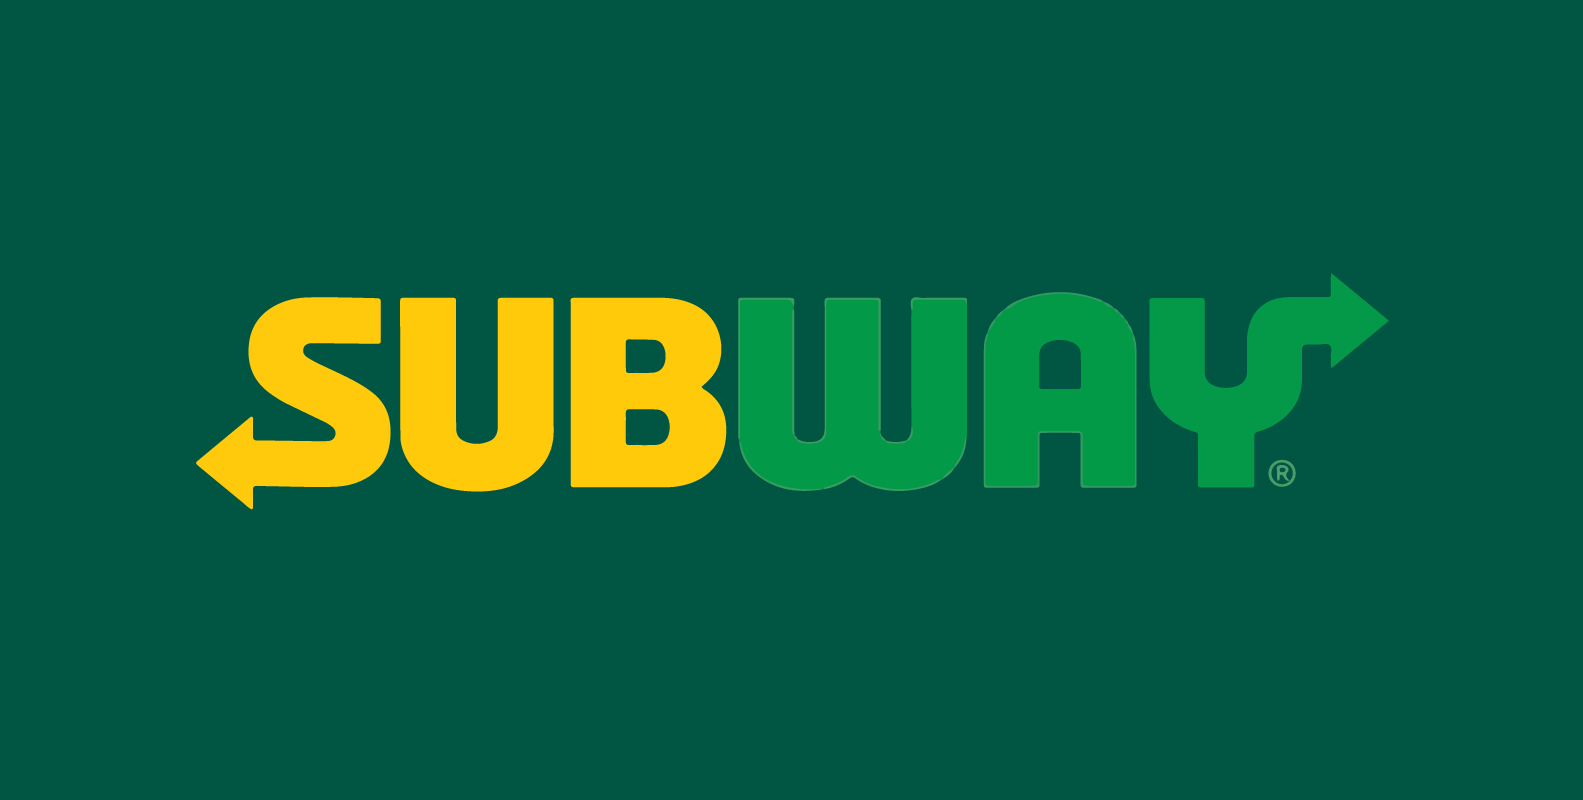 Subway Logo - Subway's Logo Got A Facelift | DesignMantic: The Design Shop